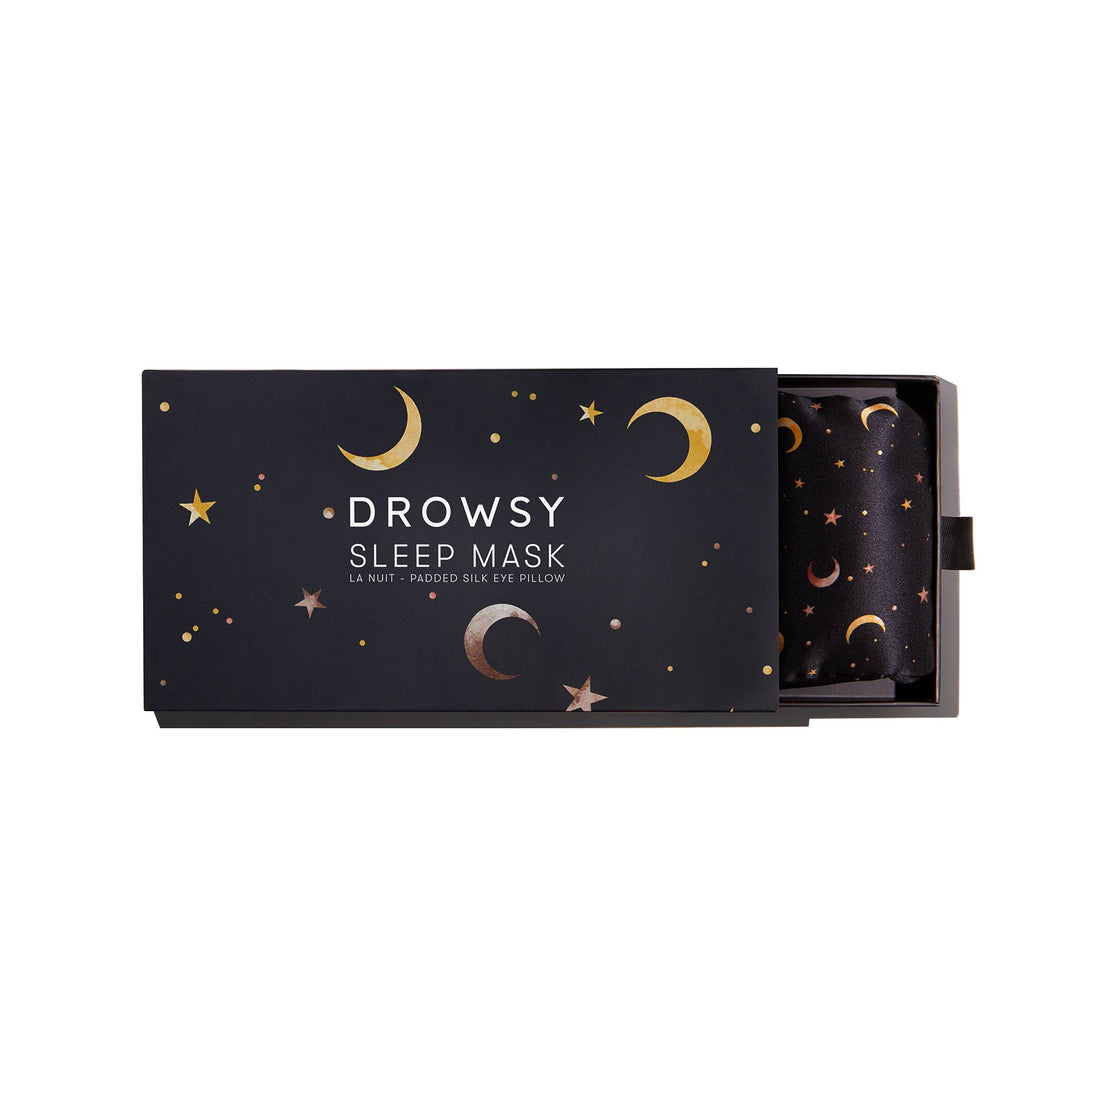 Drowsy Sleep Co. La Nuit Silk Sleep Mask box on white background